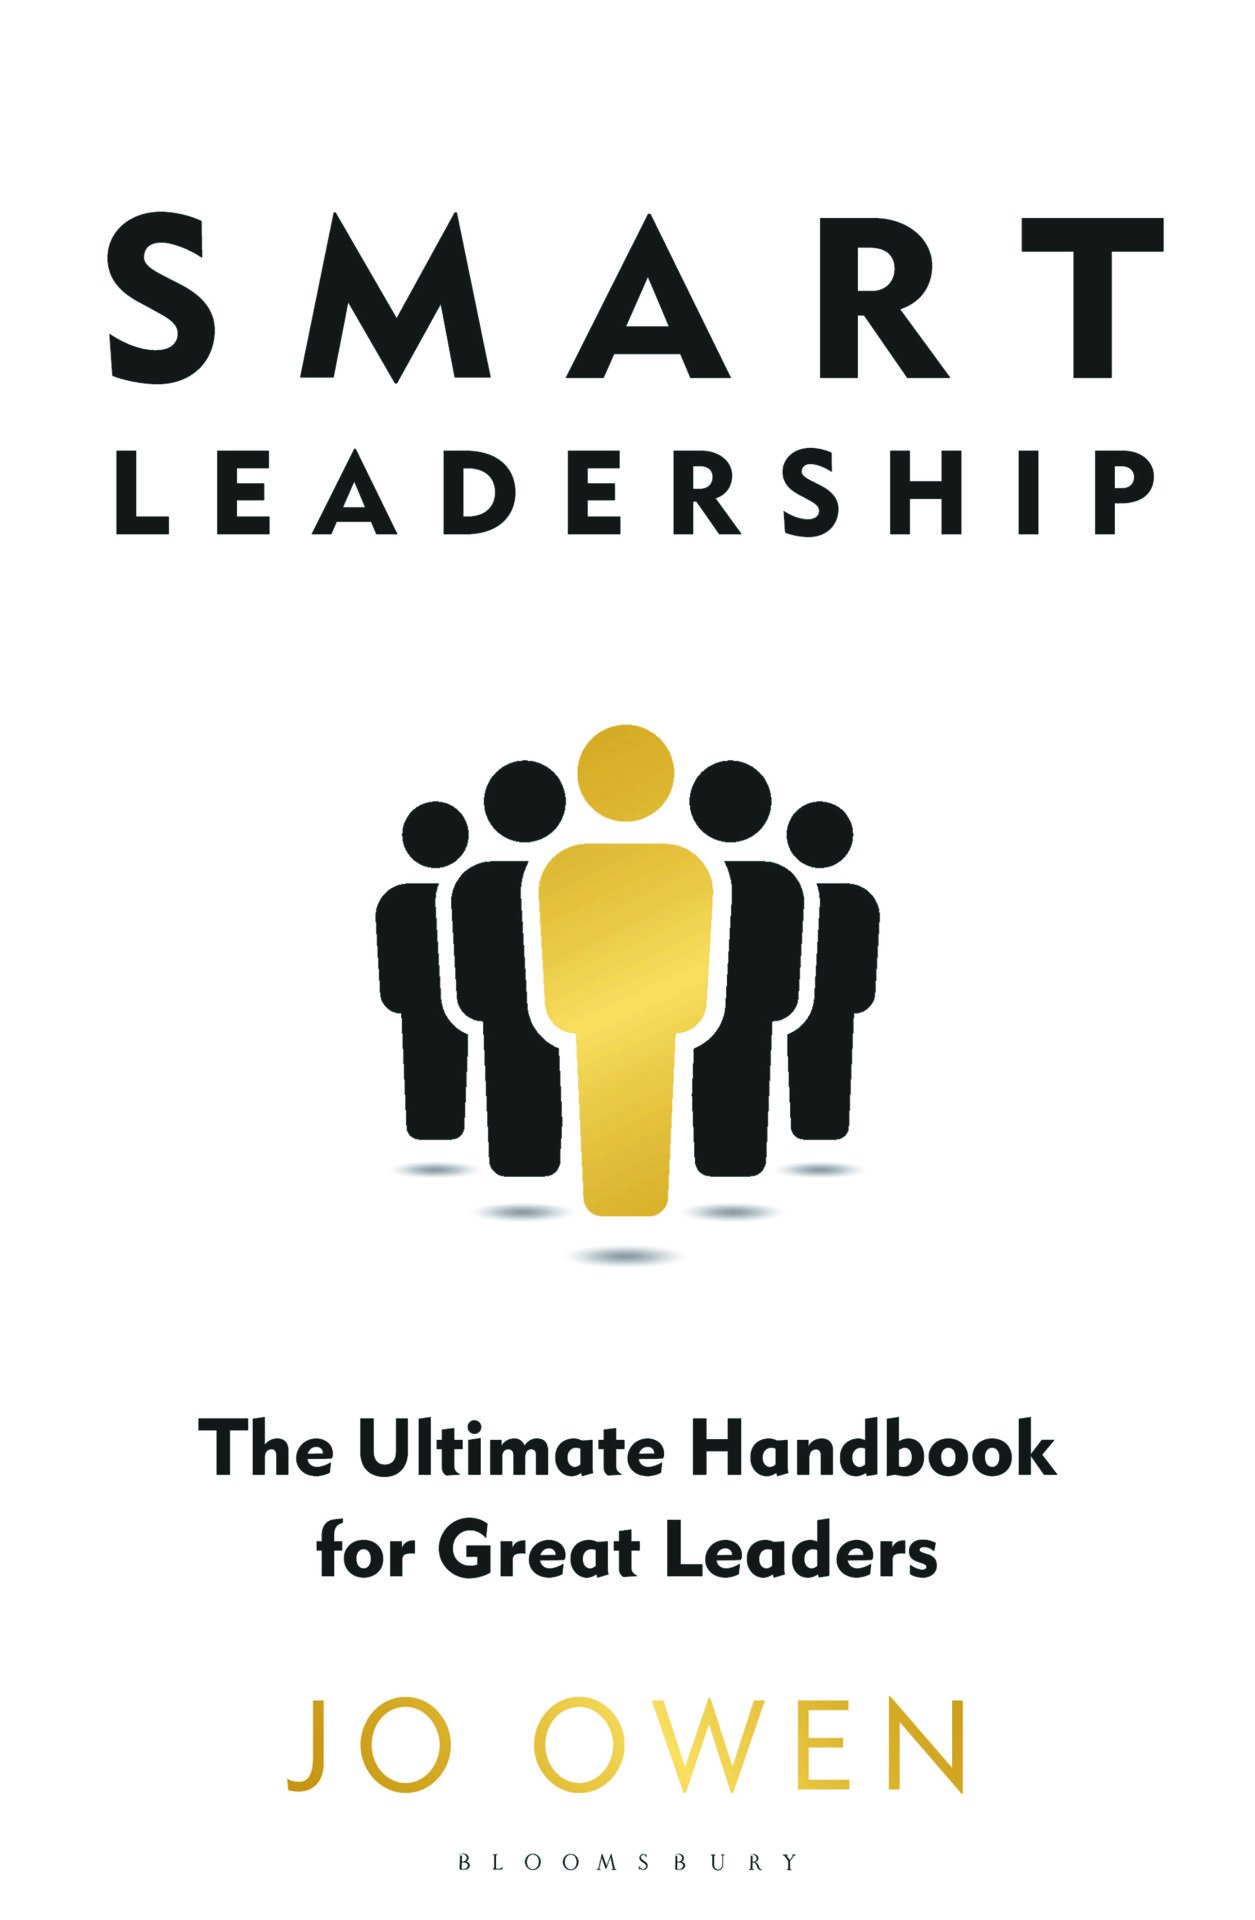 Smart Leadership in the AMBA Book Club